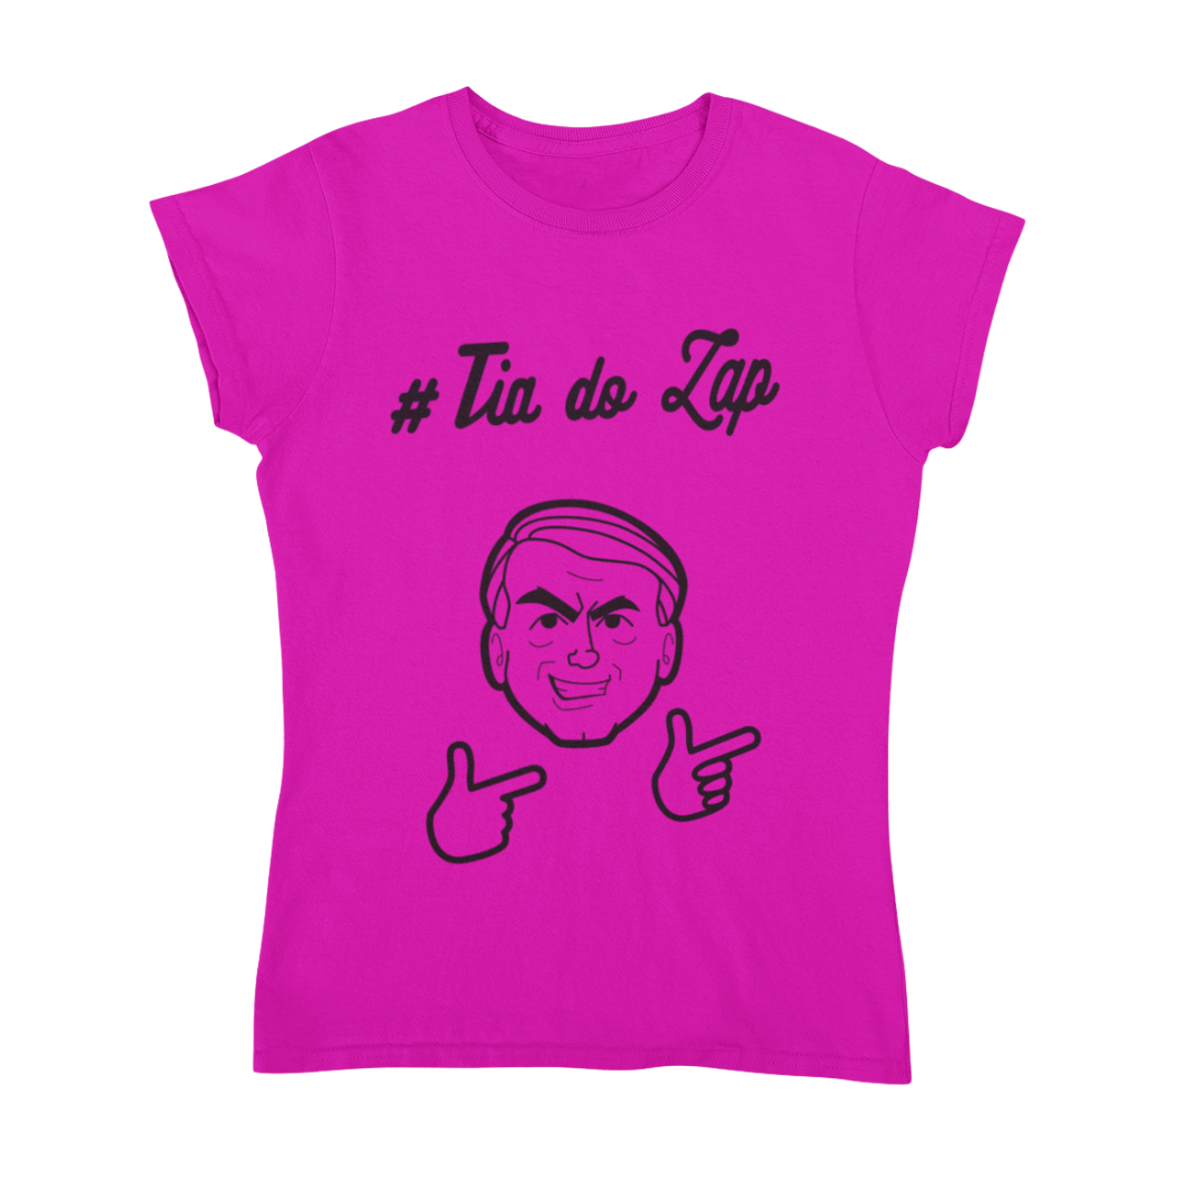 Nome do produto: Camiseta #Tia do Zap - Amarela e Rosa, feminina